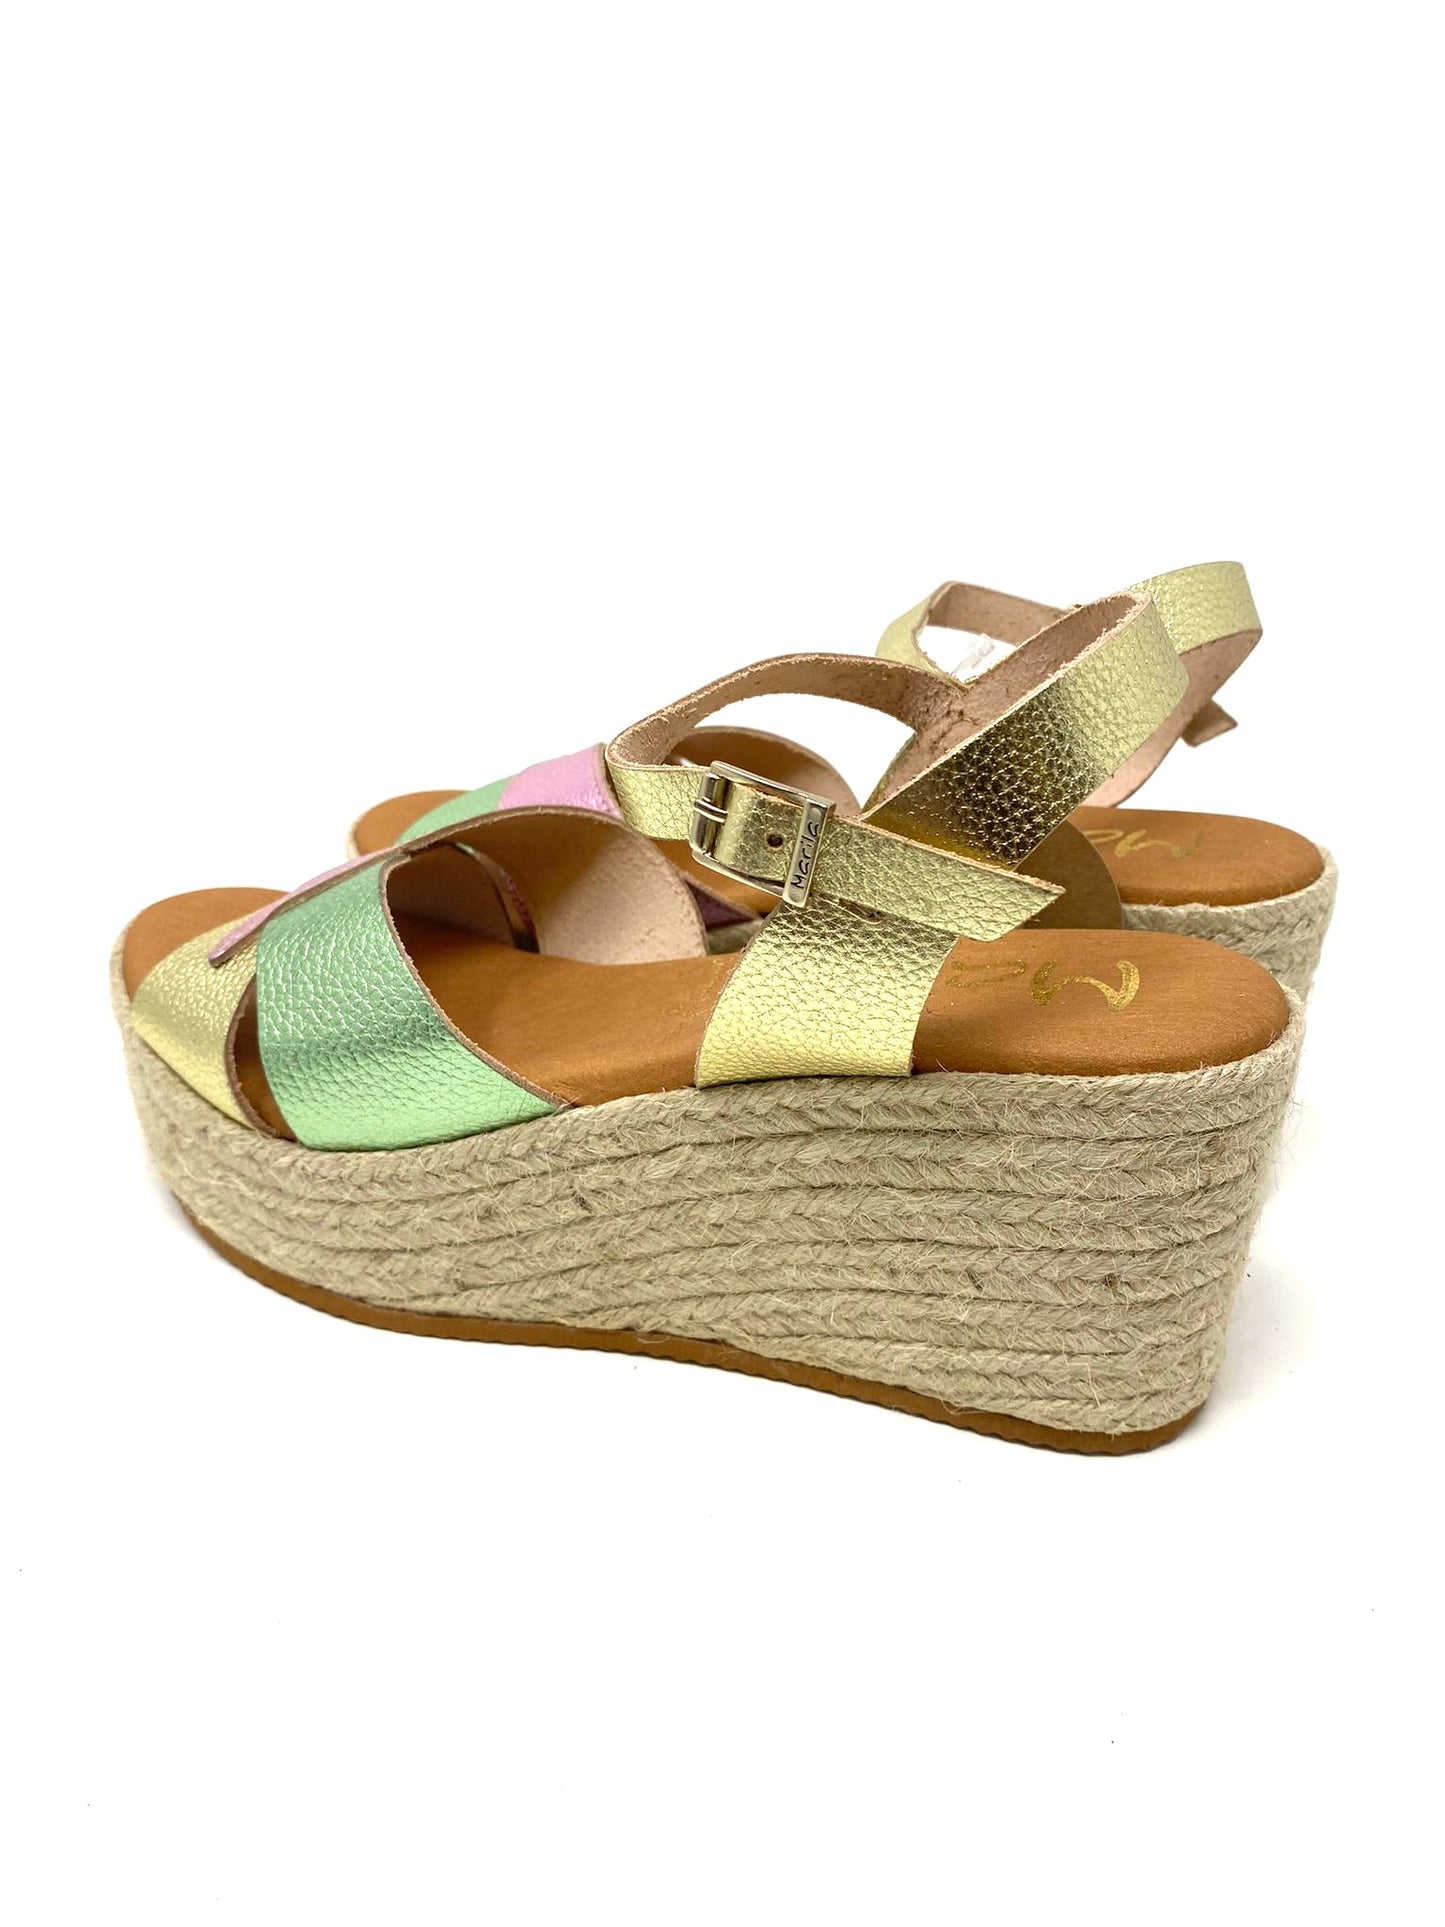 Marila Hamilton Grab metallic platform wedge sandal